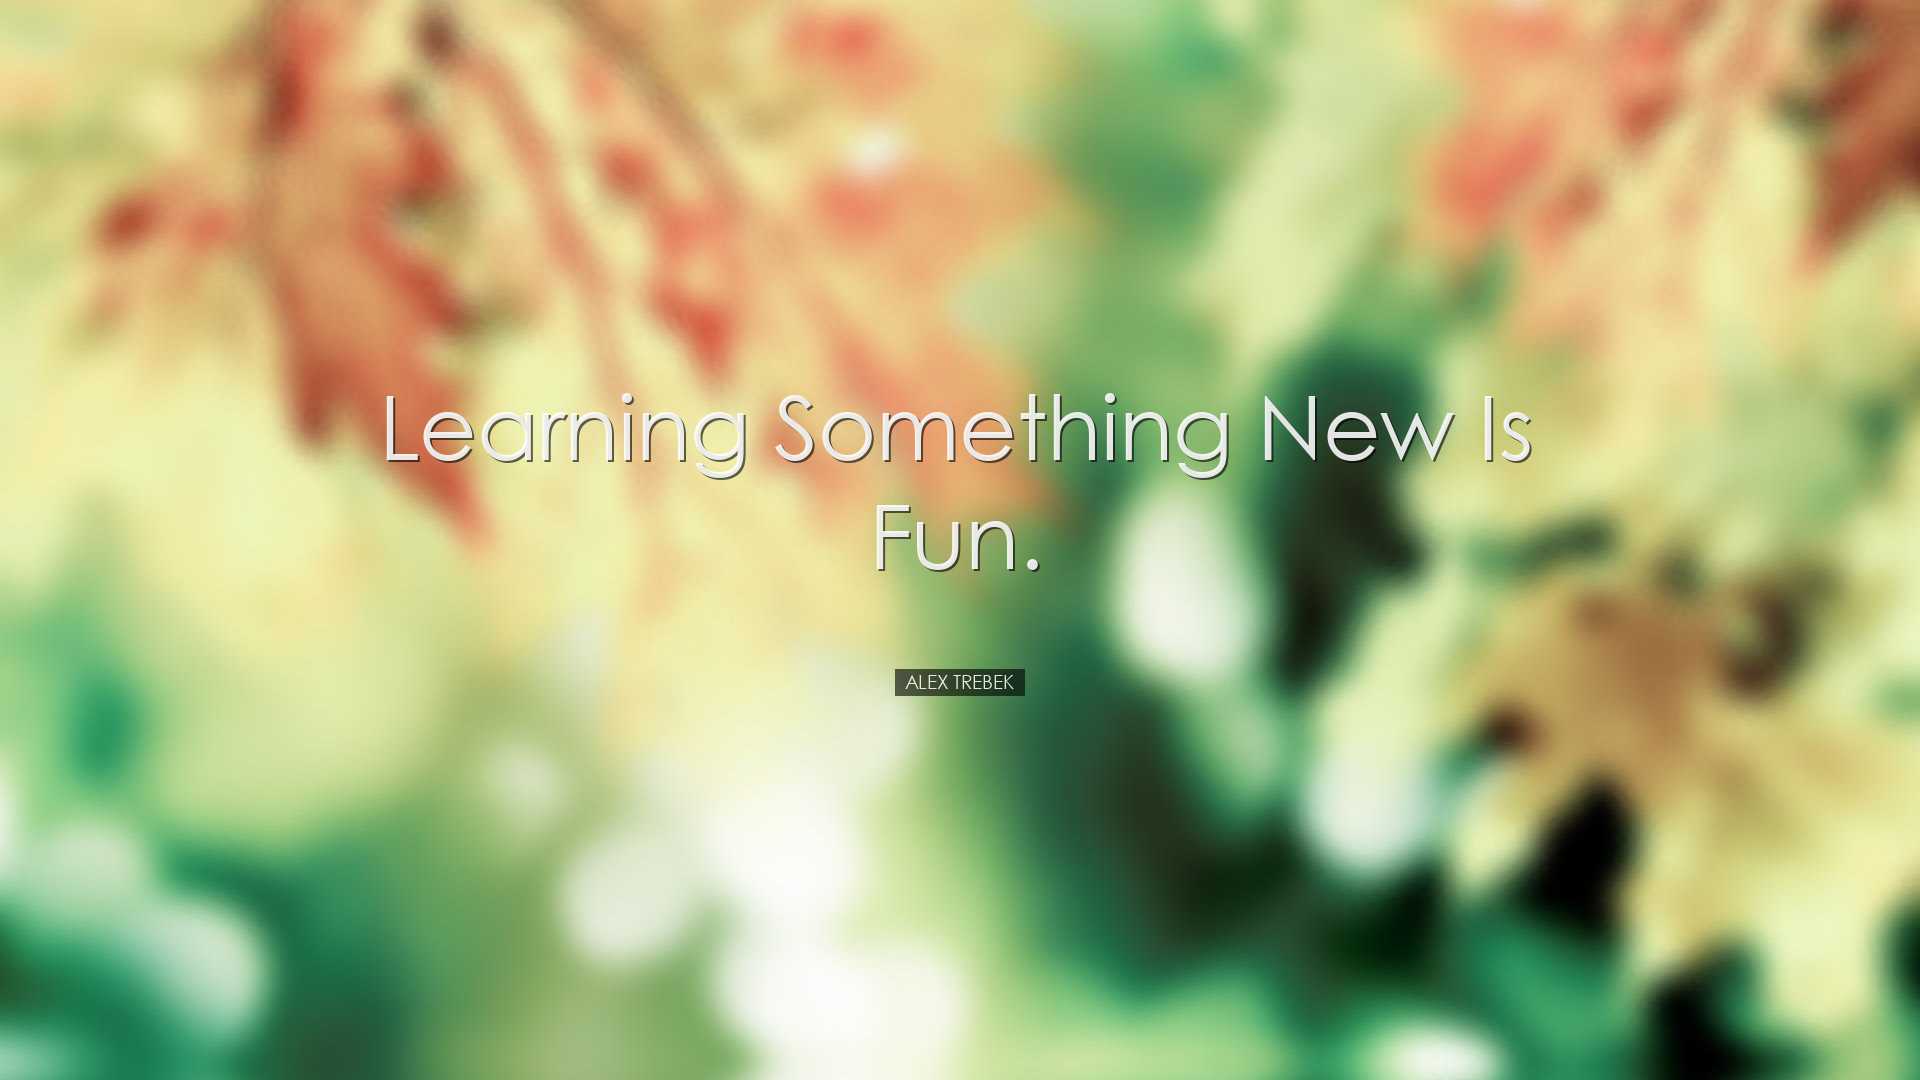 Learning something new is fun. - Alex Trebek